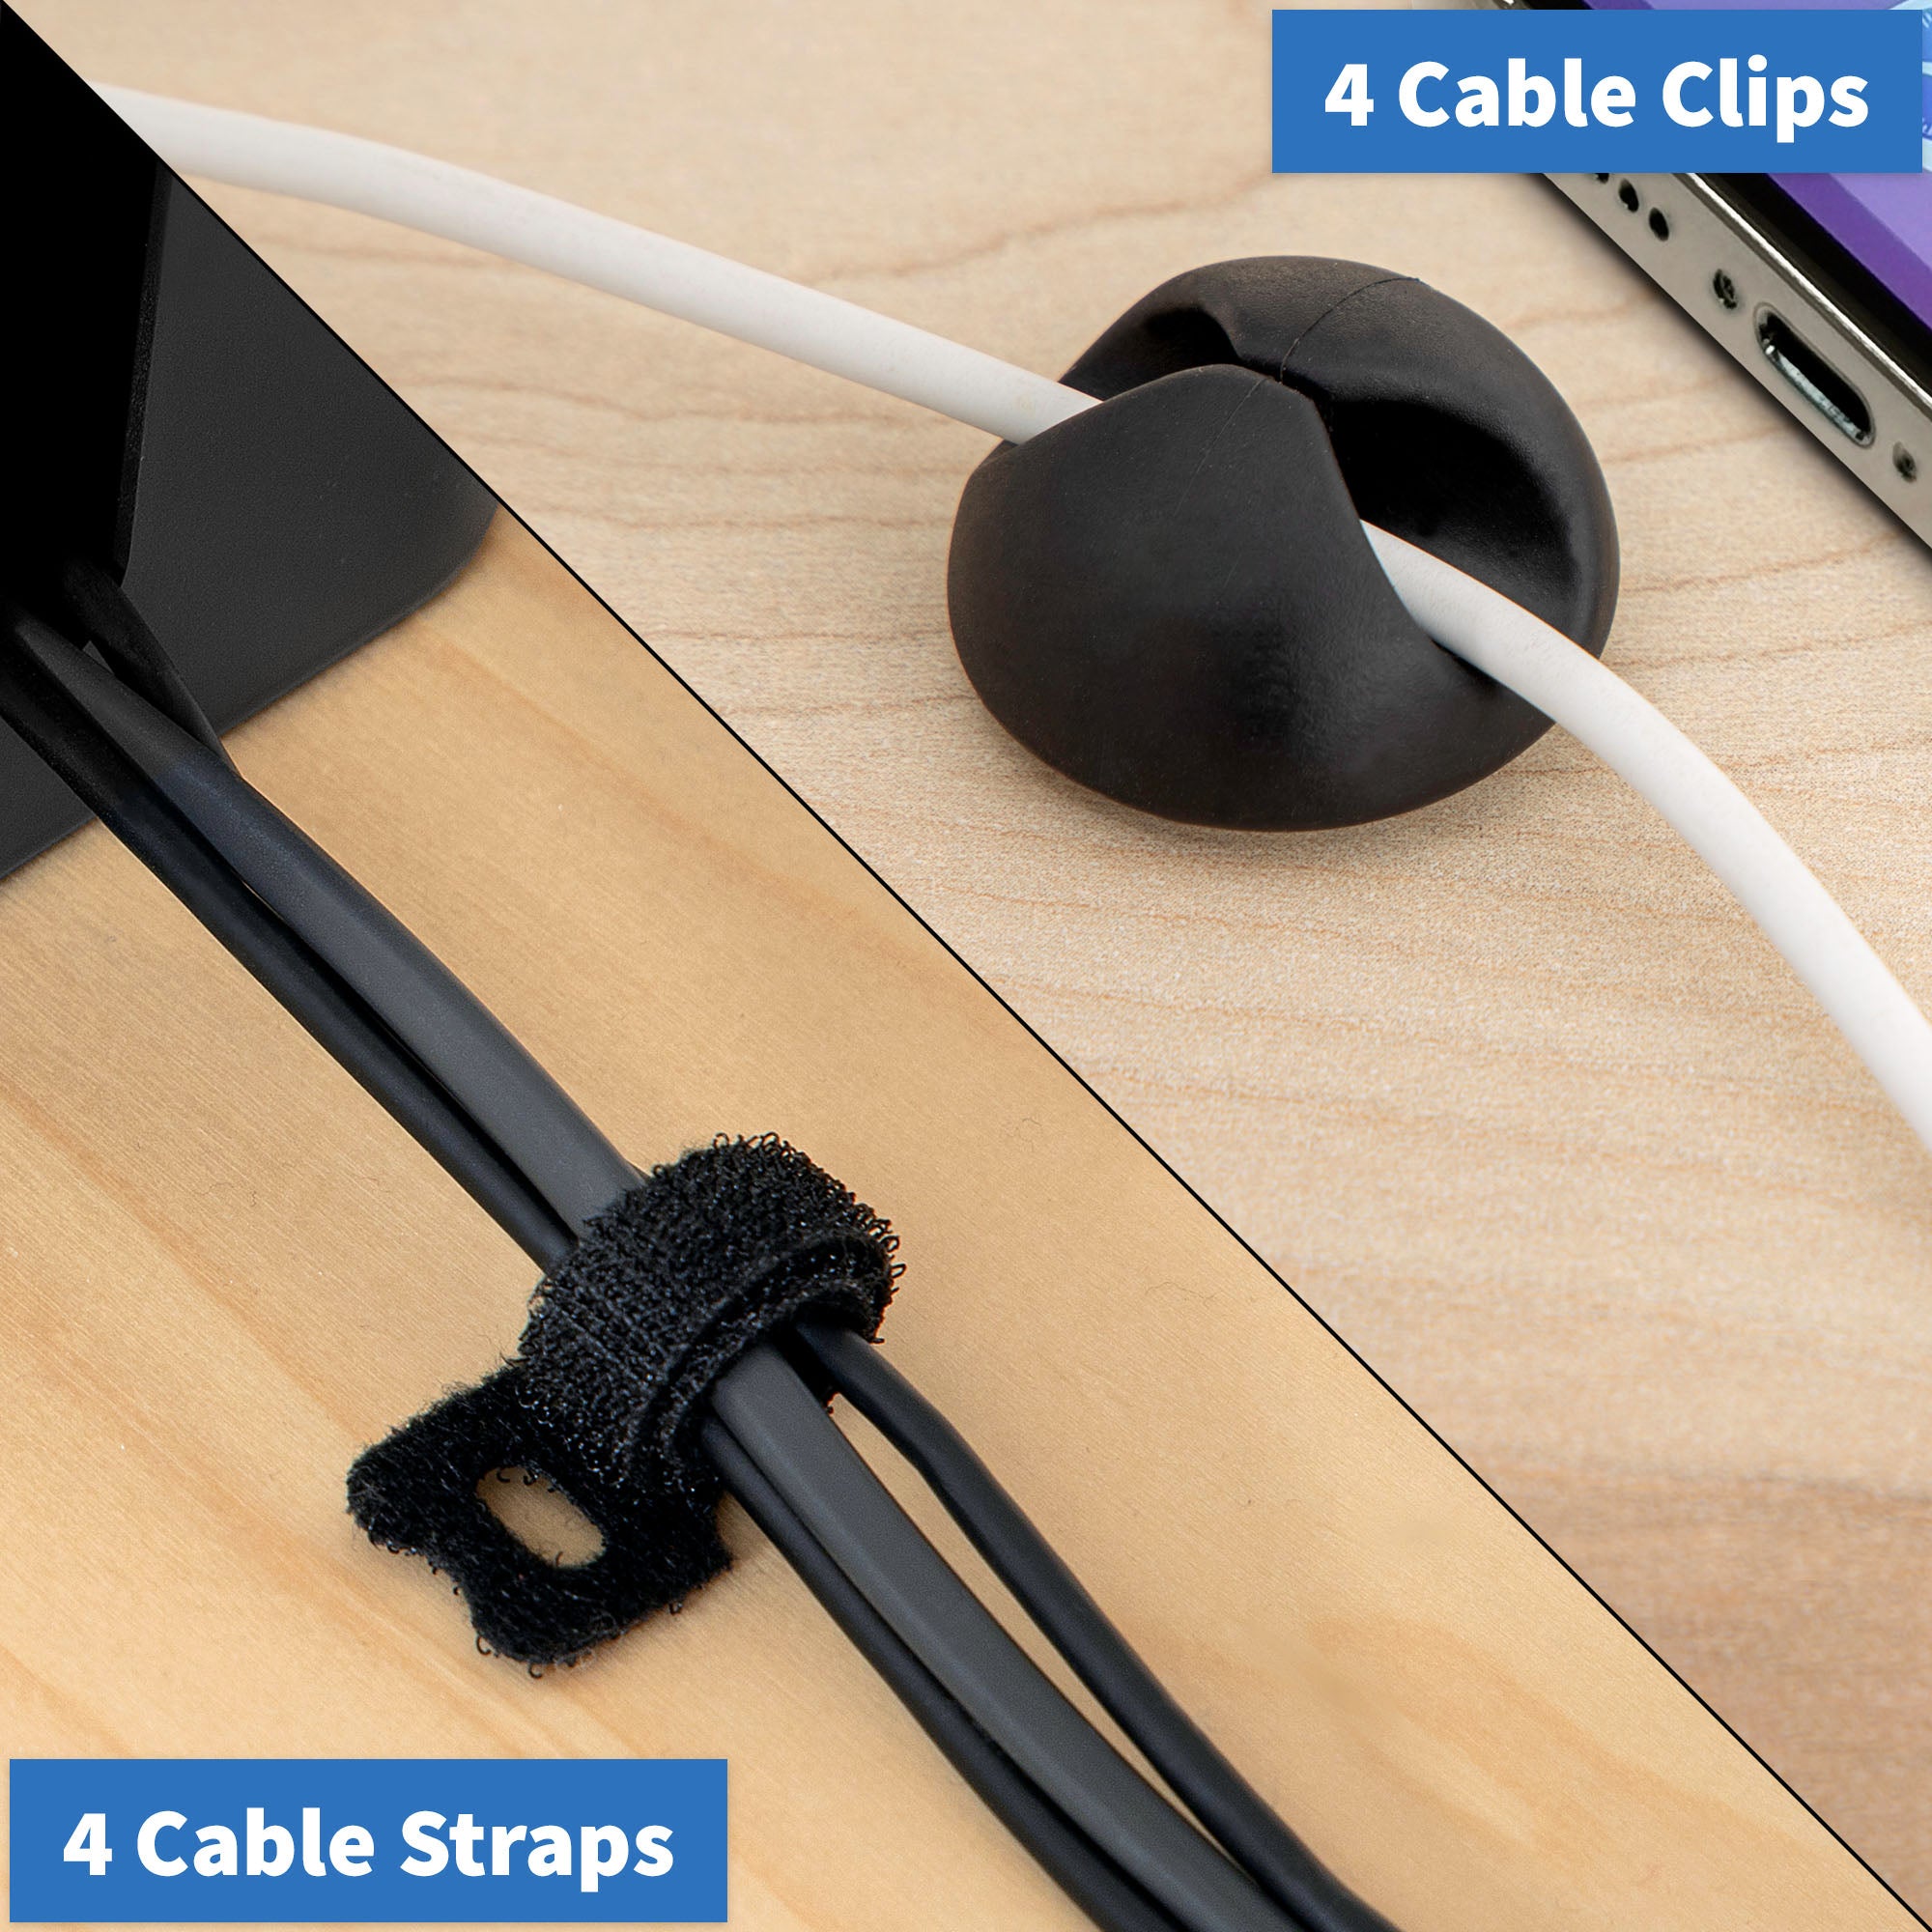 Cable Management Box, Power Strip Holder, Floor Socket Hider